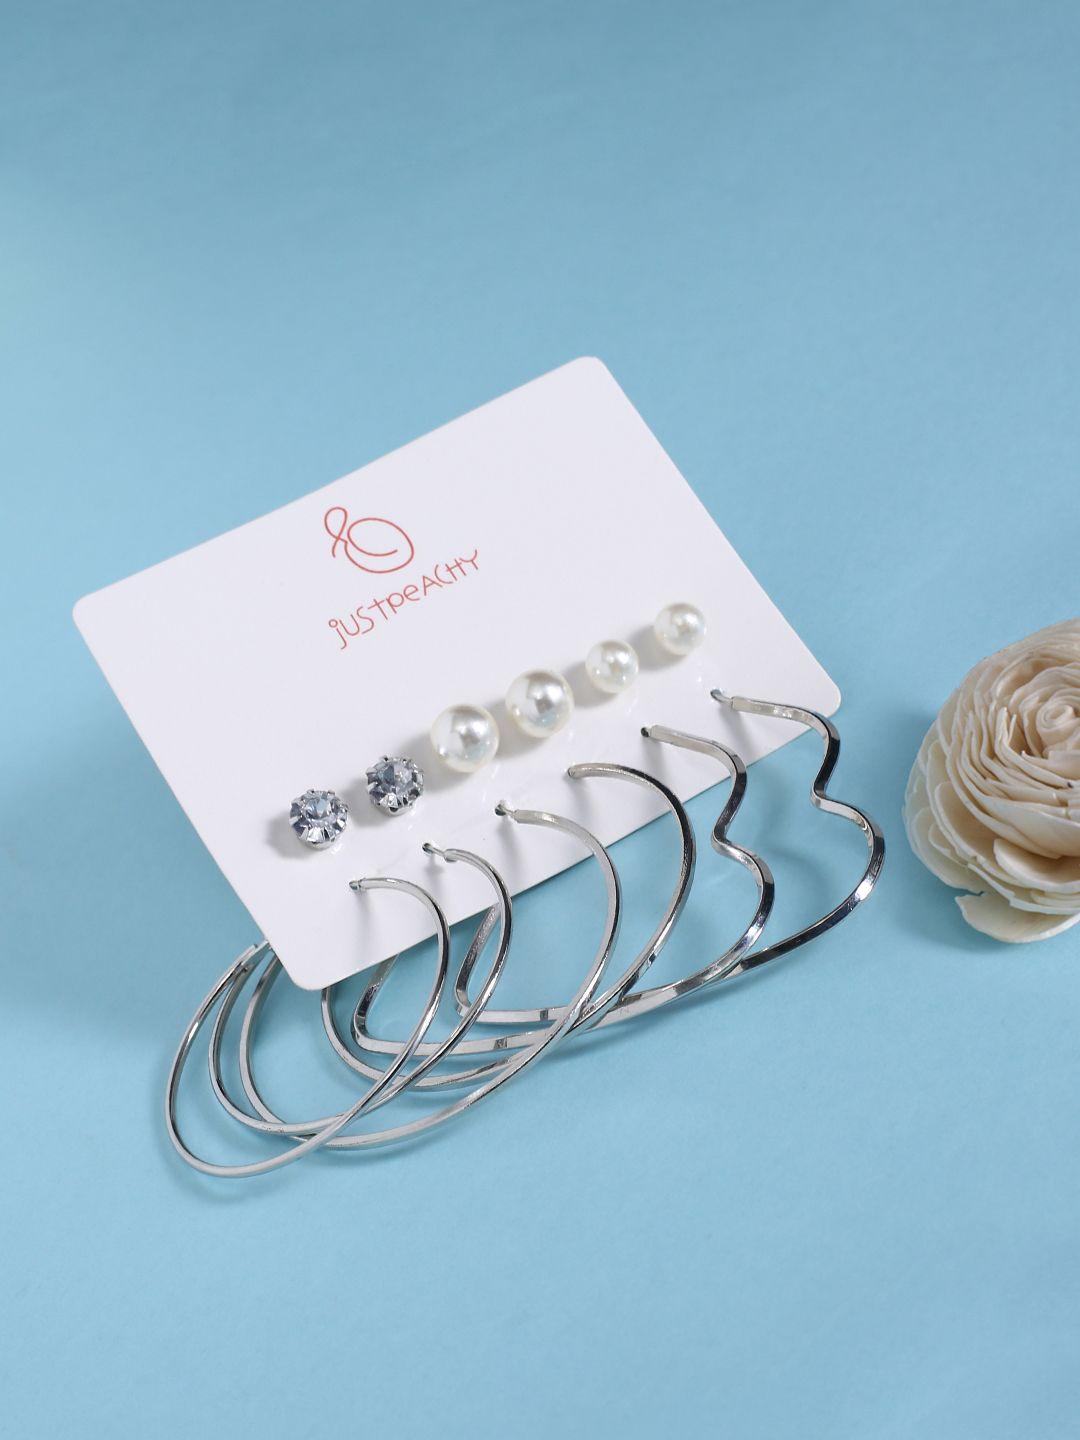 justpeachy set of 6 silver-plated earrings